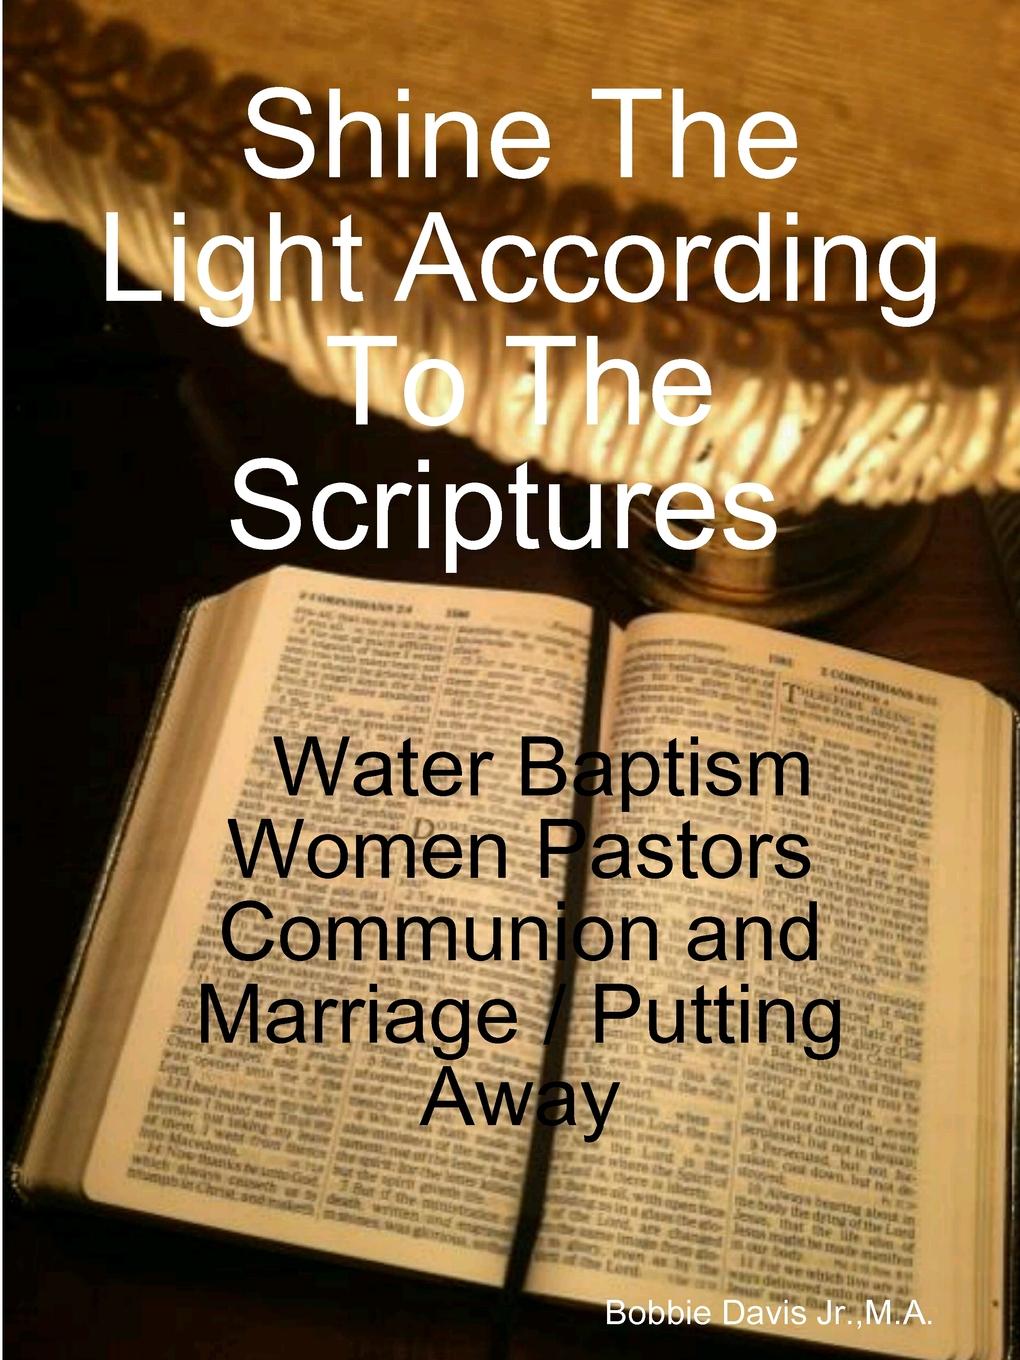 Bobbie Davis Jr. Shine The Light According To The Scriptures